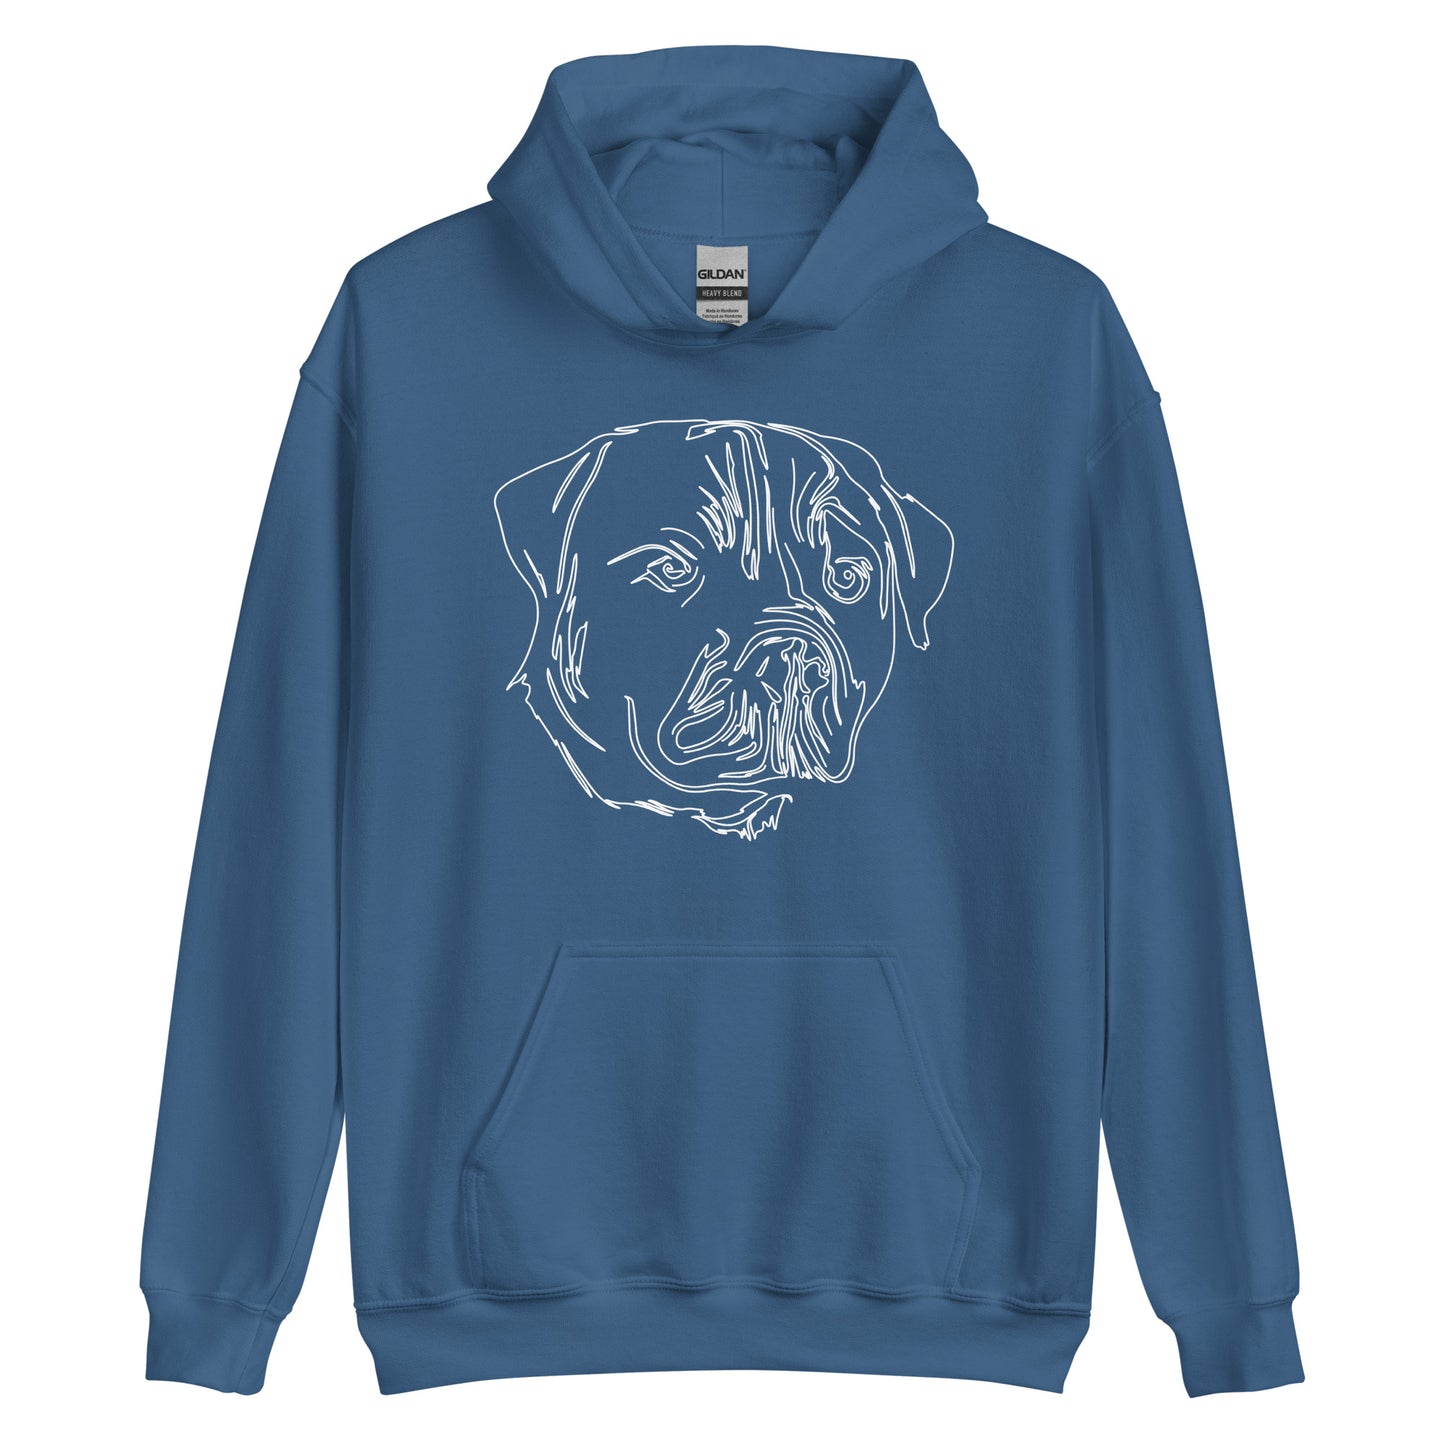 White line Rottweiler face on unisex indigo blue hoodie